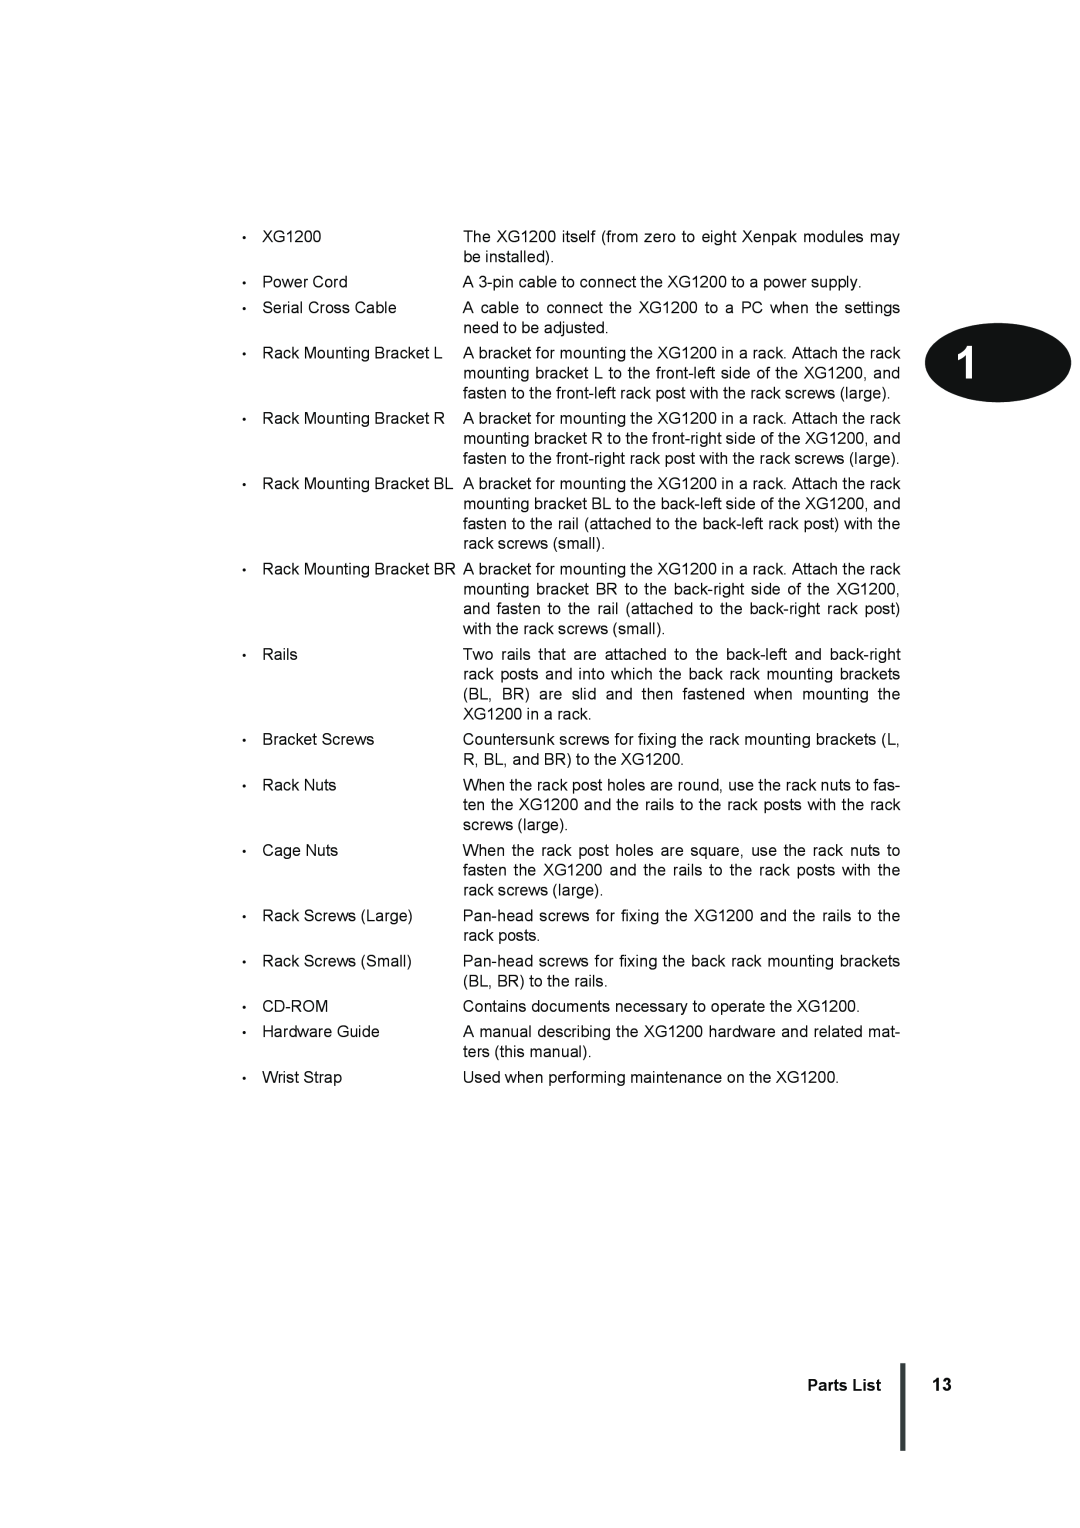 Fujitsu XG1200 manual Parts List 